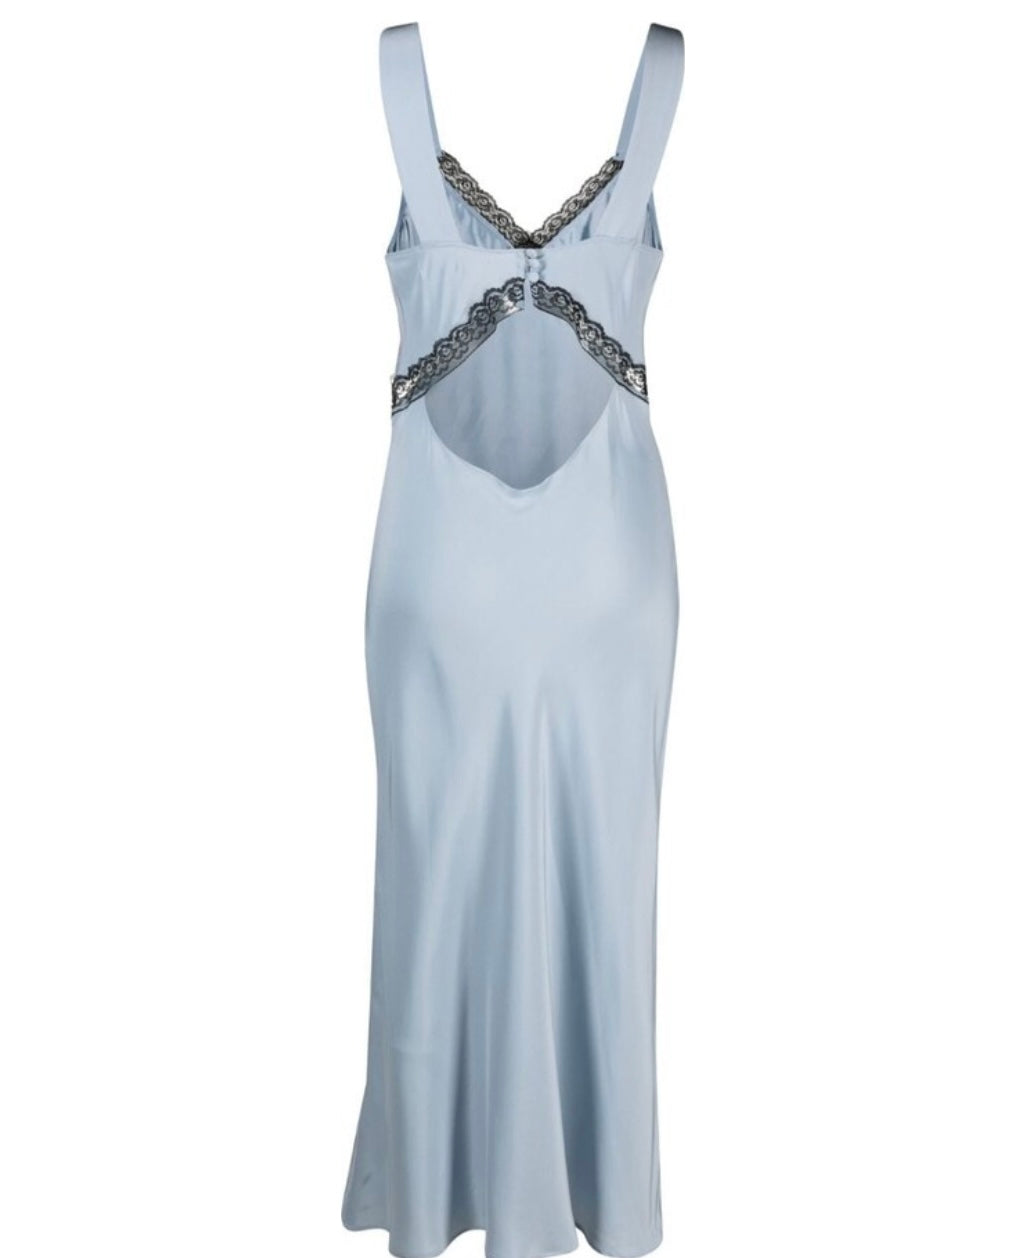 Reformation - Provence lace-trim silk dress - Blue